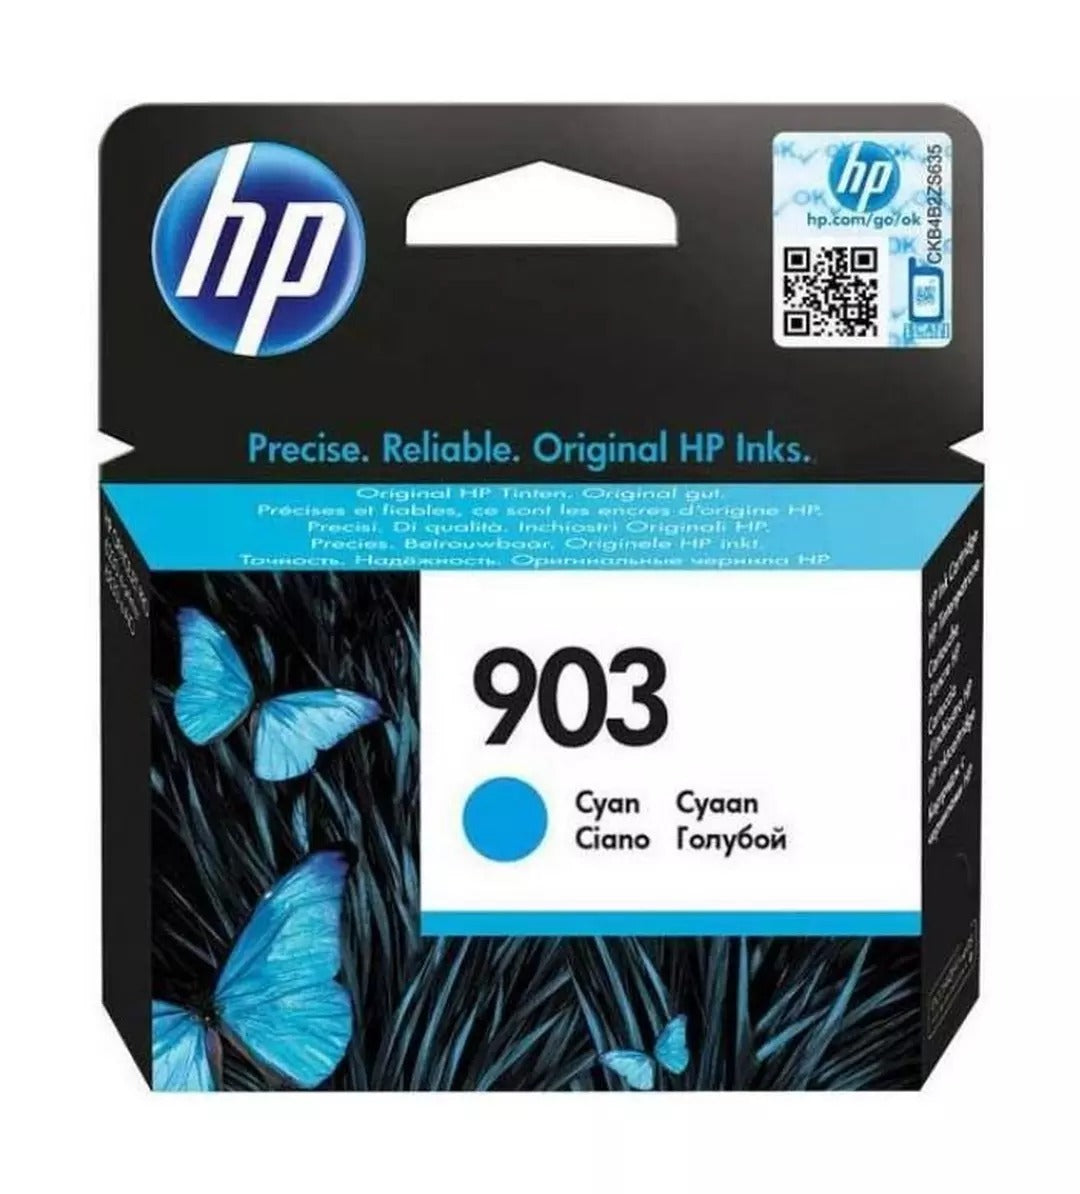 HP 903 Original Ink Cartridge - Cyan